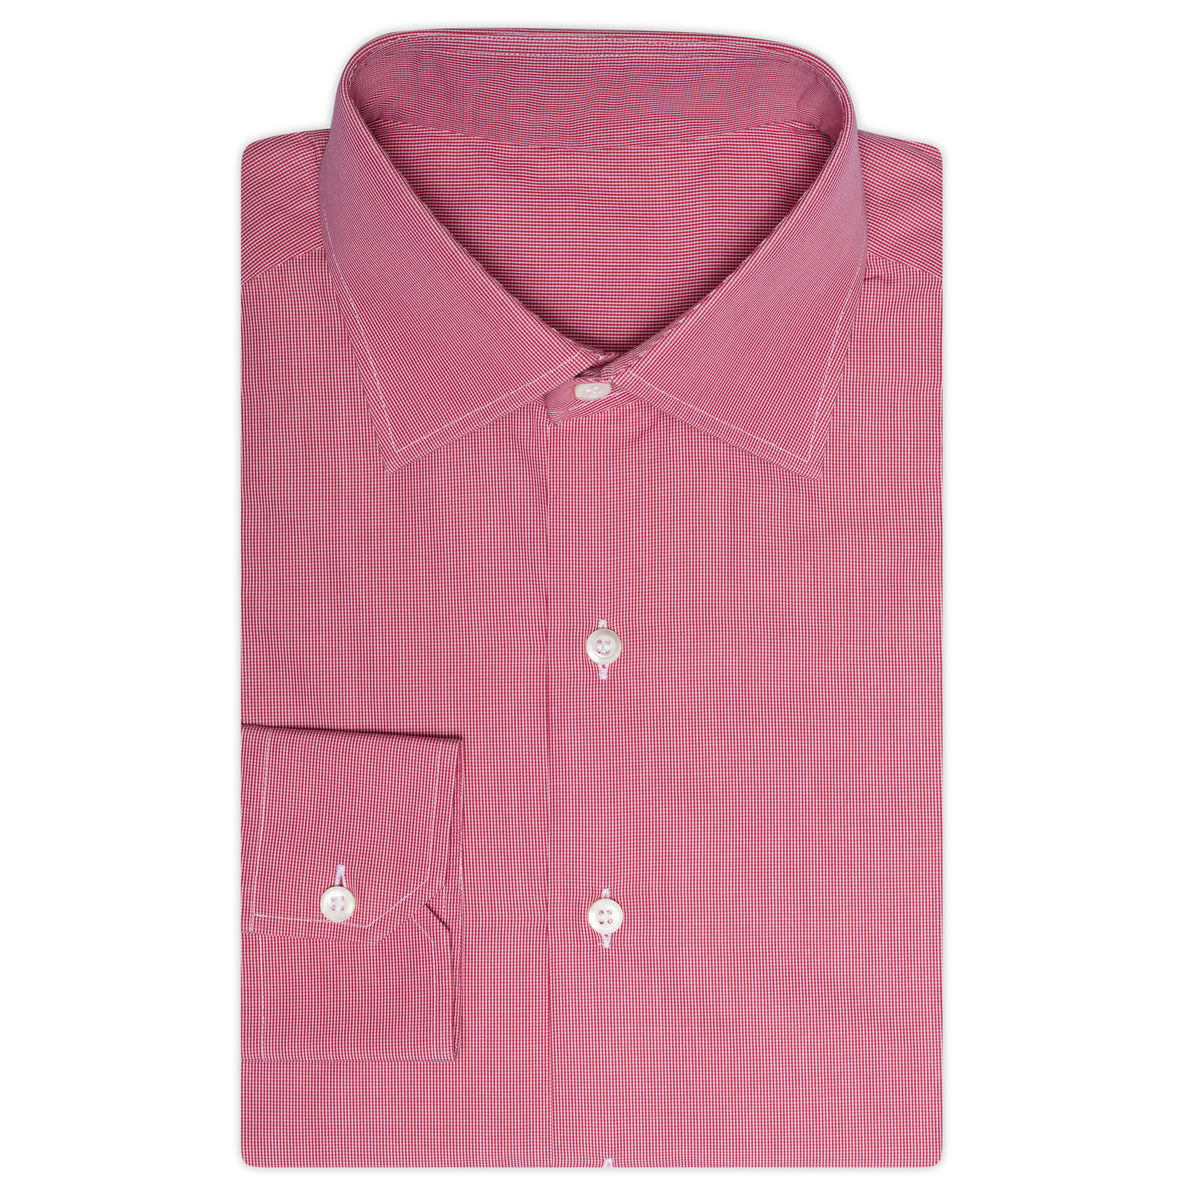 BESPOKE ATHENS Handmade Red Patterned Cotton Dress Shirt EU 41 NEW US ...